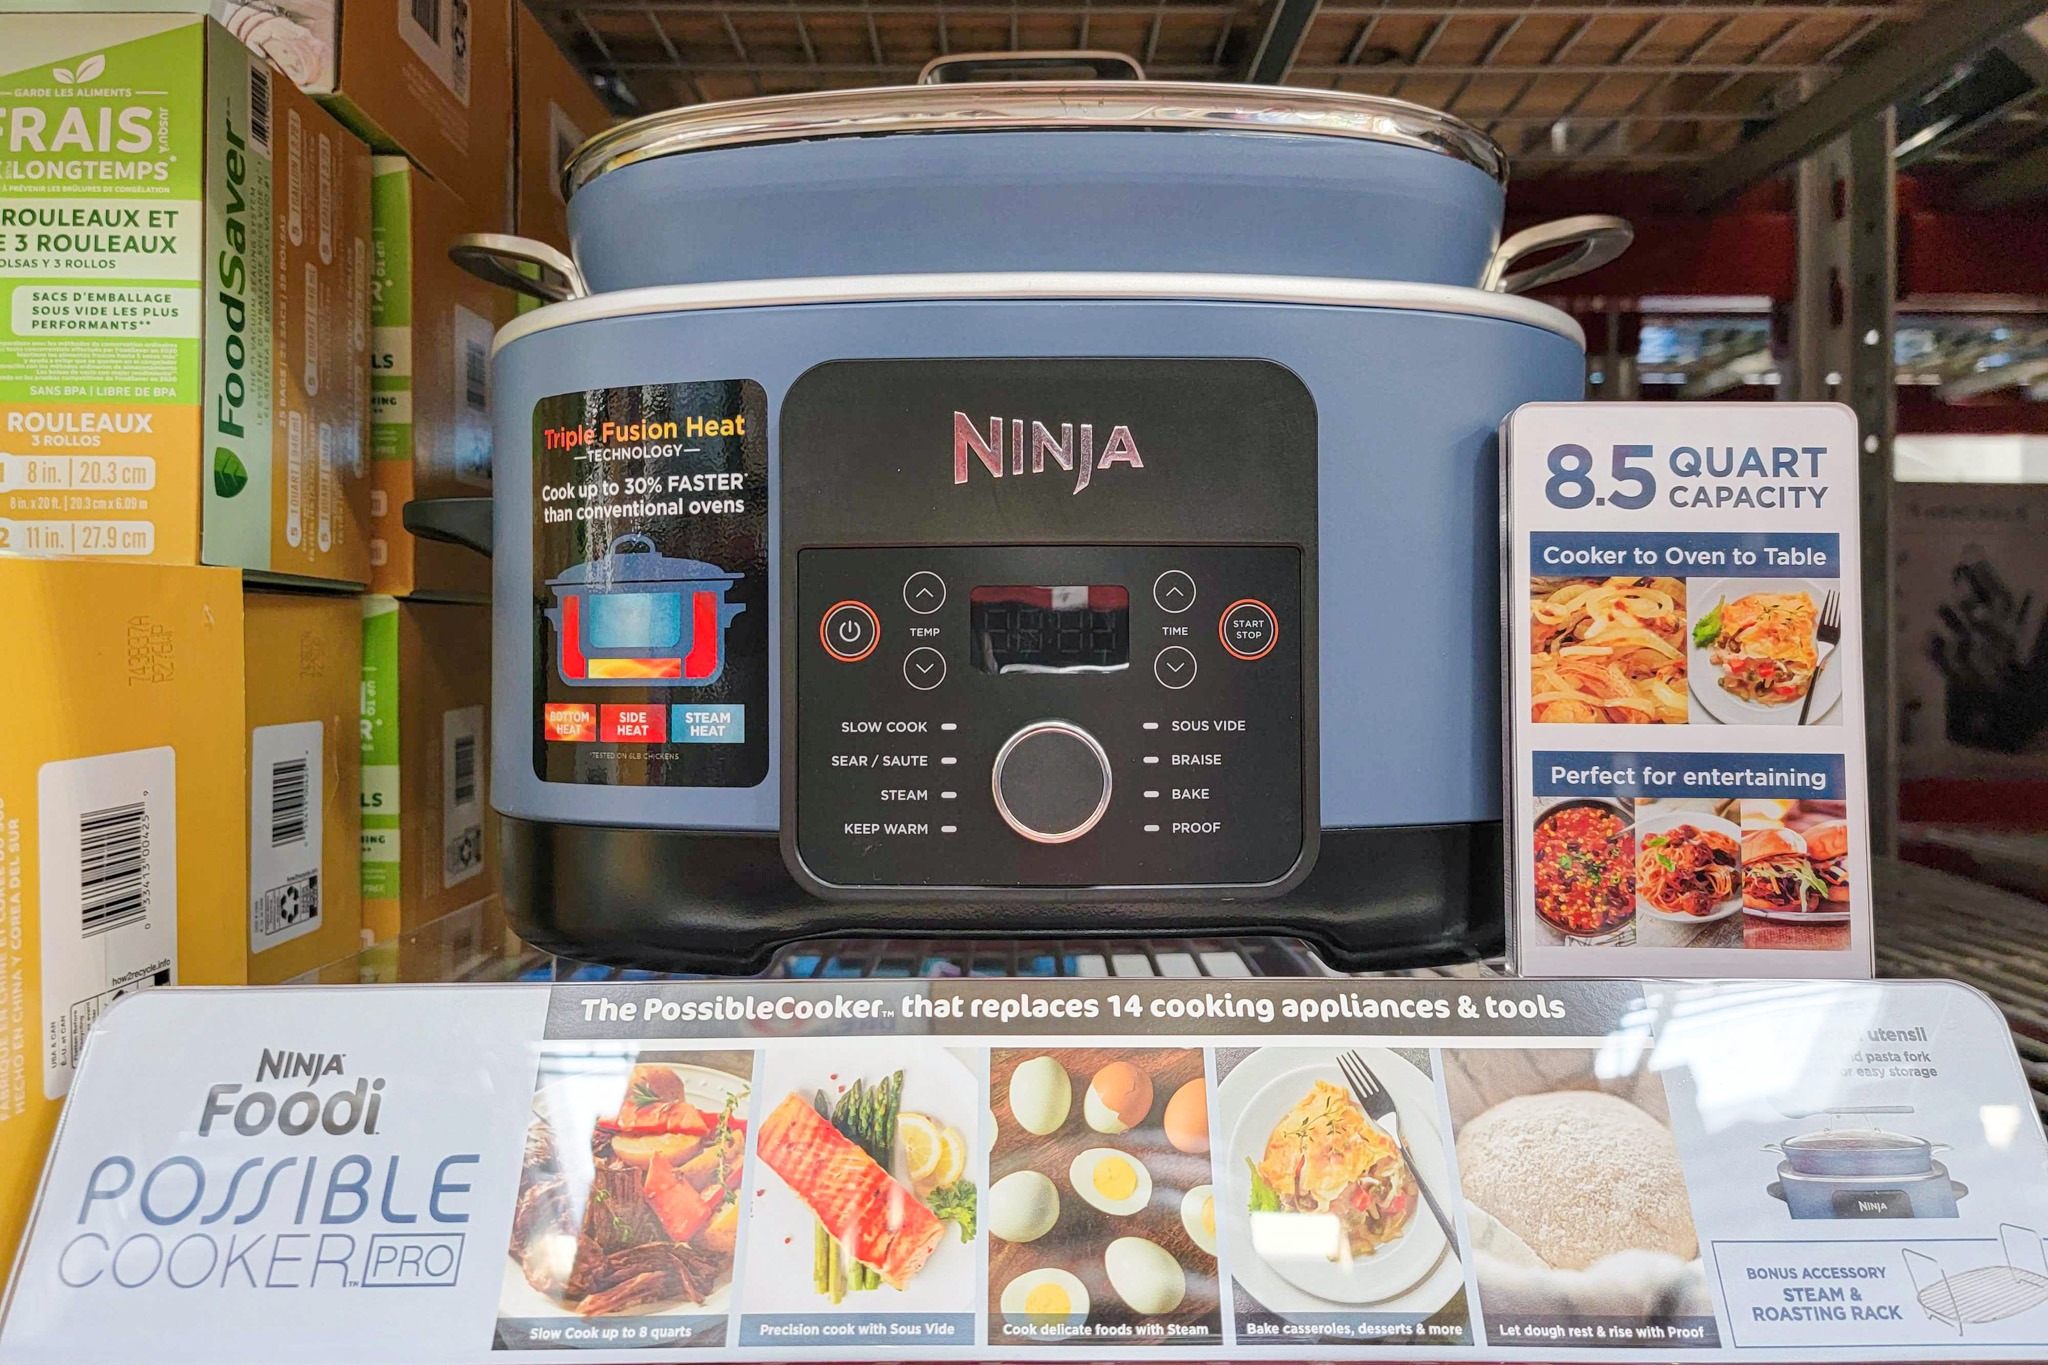 Sam's Club - Ninja Foodi Possible Cooker Pro So many possibilities